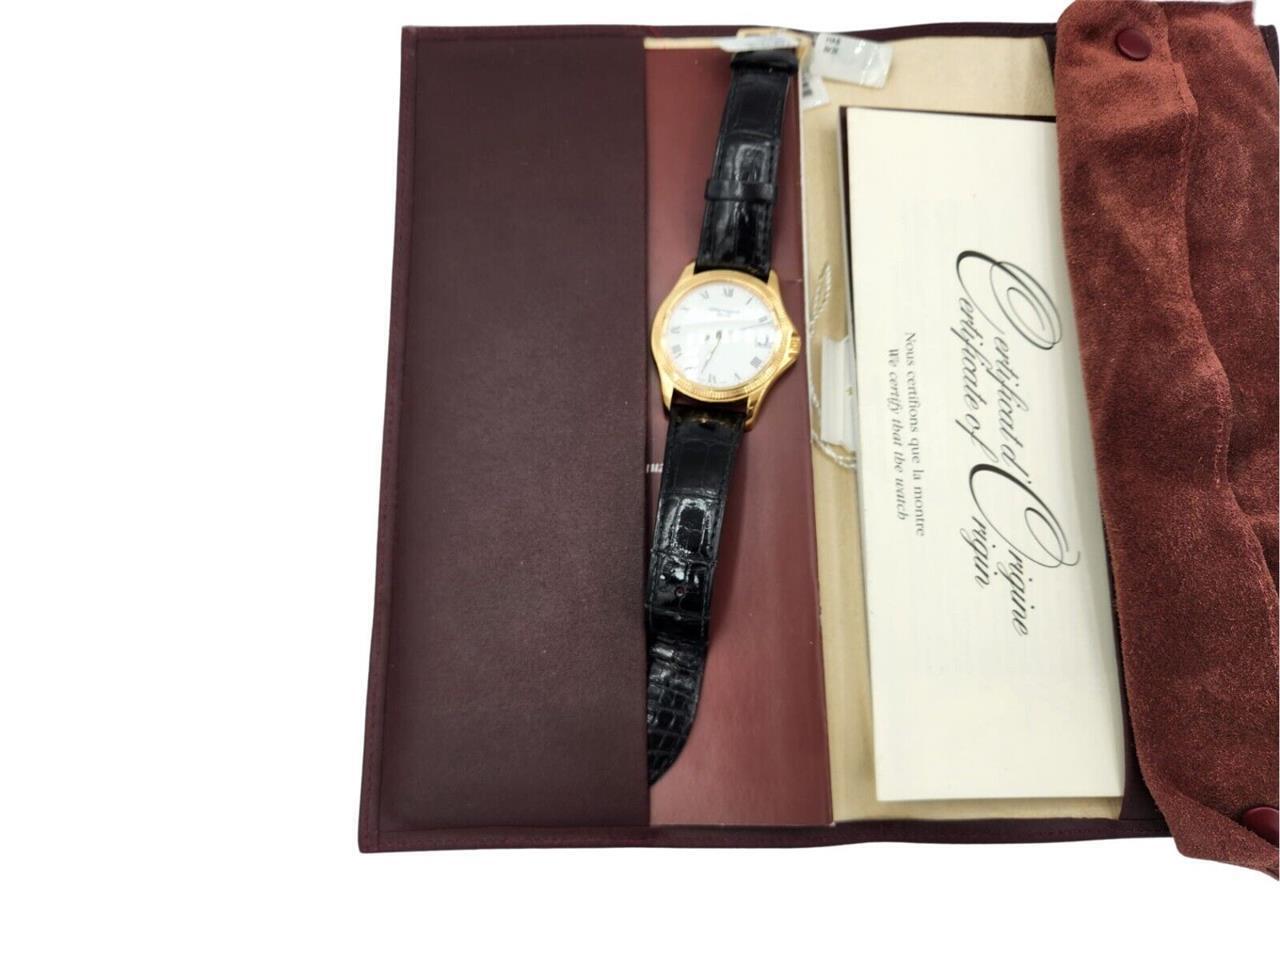 Patek Philippe Calatrava (5117R001) Self-Winding Automatic watch 37mm Rose gold